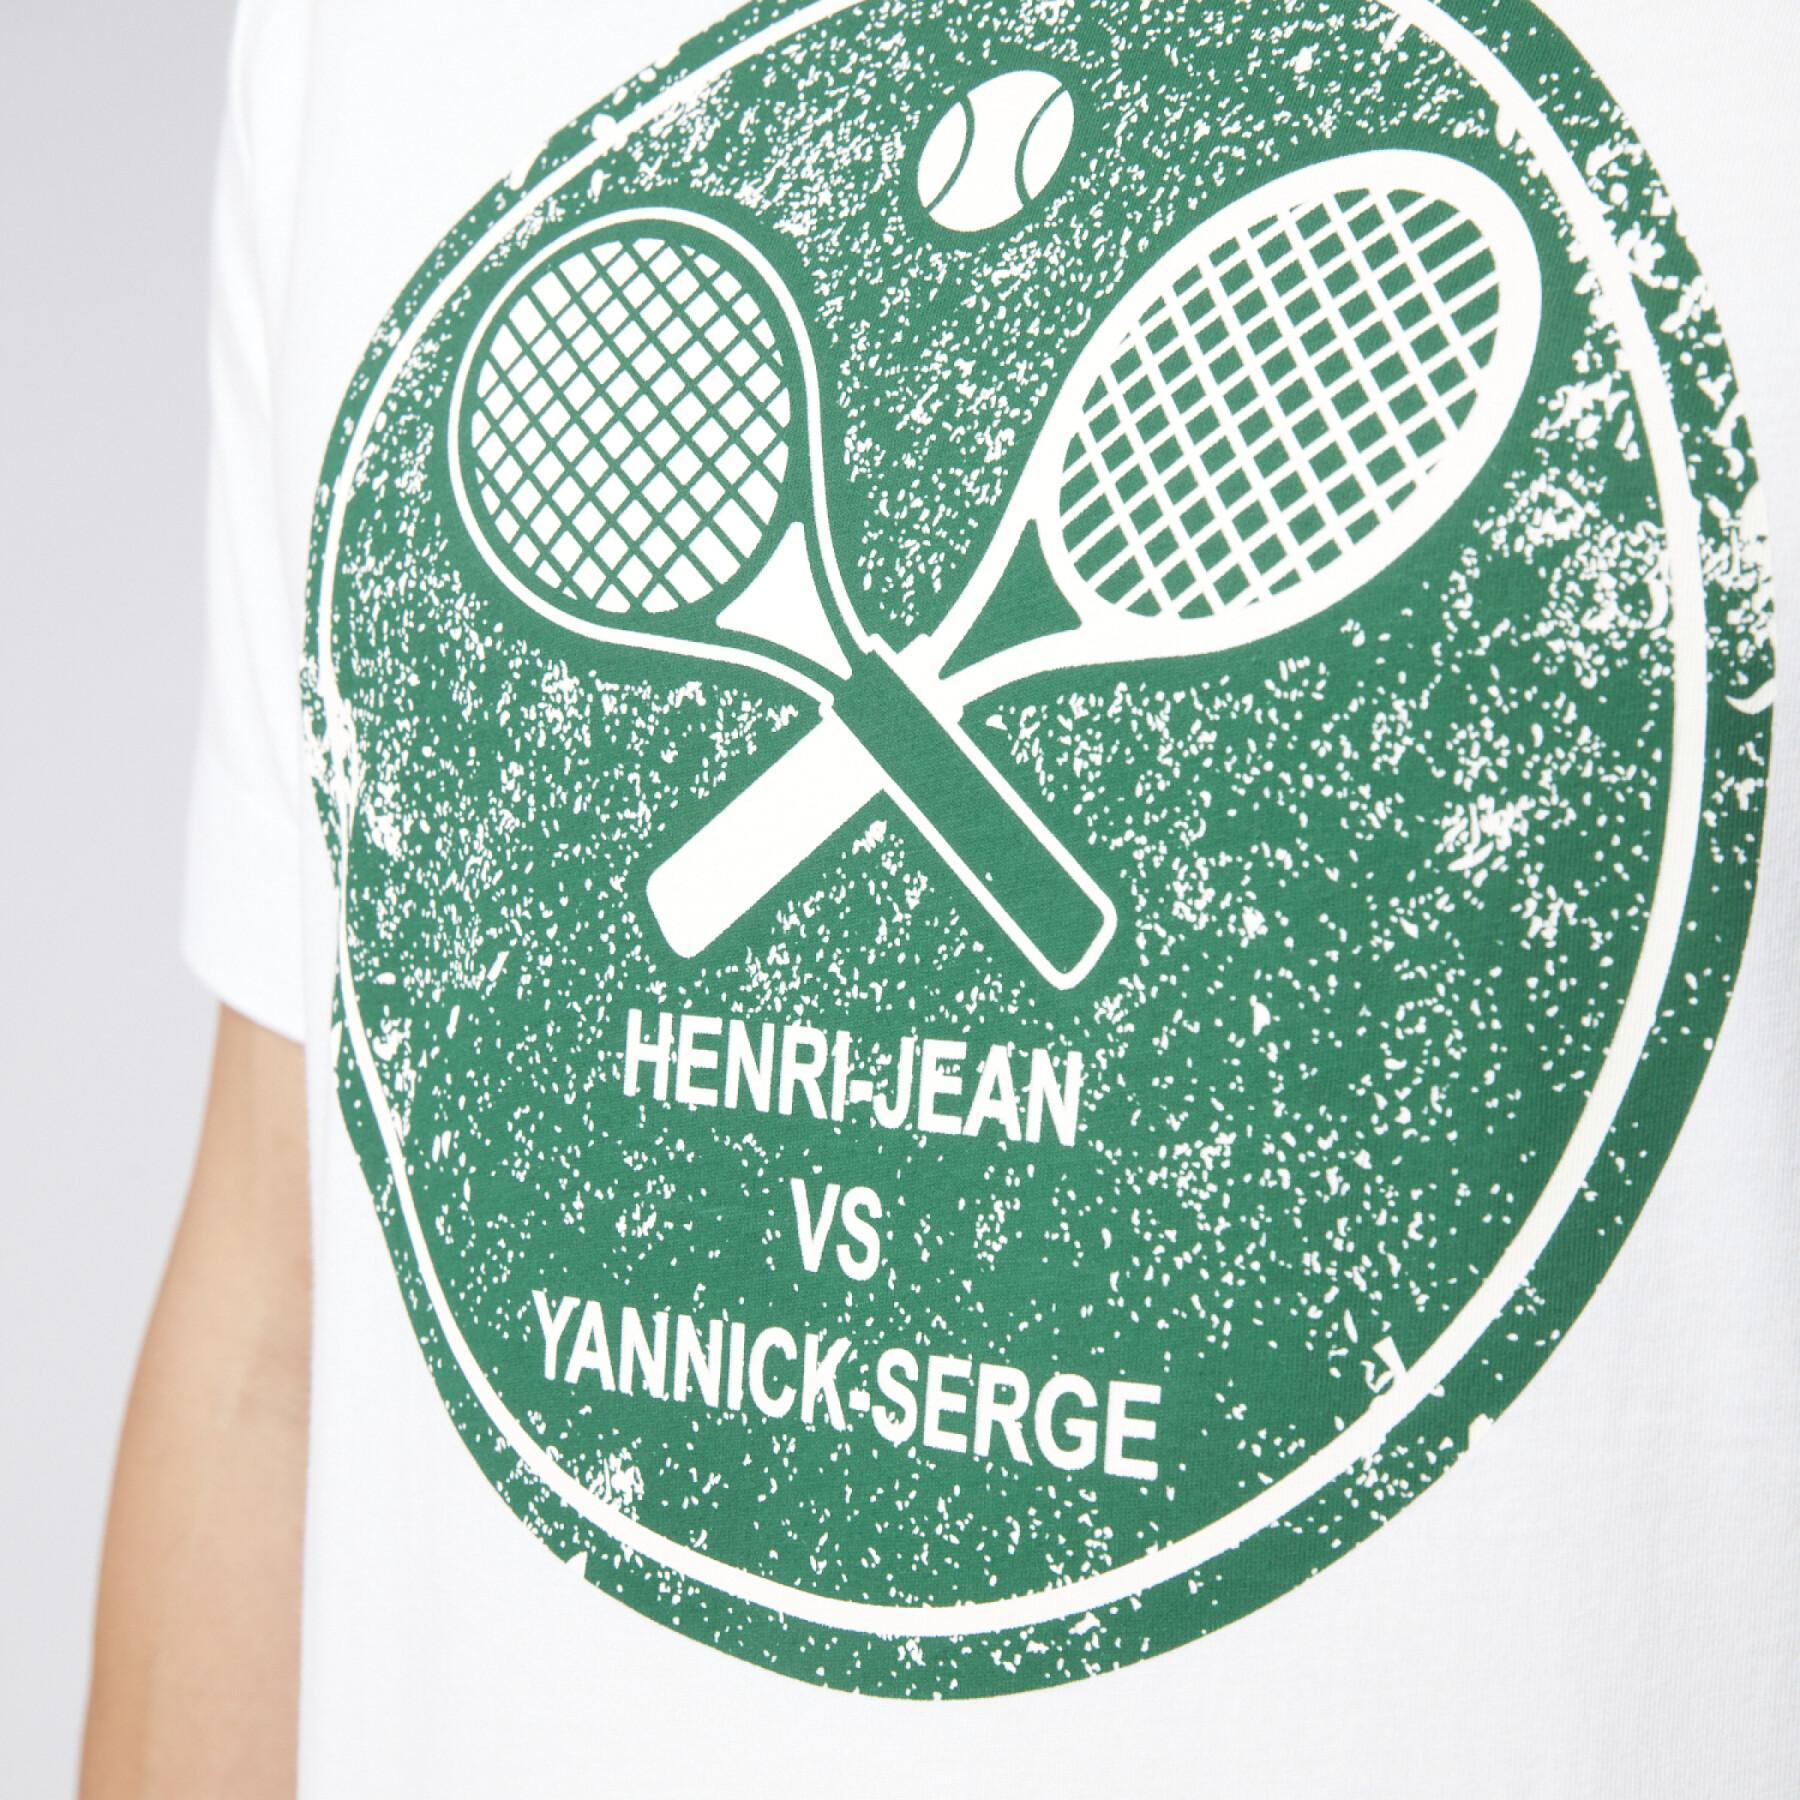 Camiseta de punto Serge Blanco